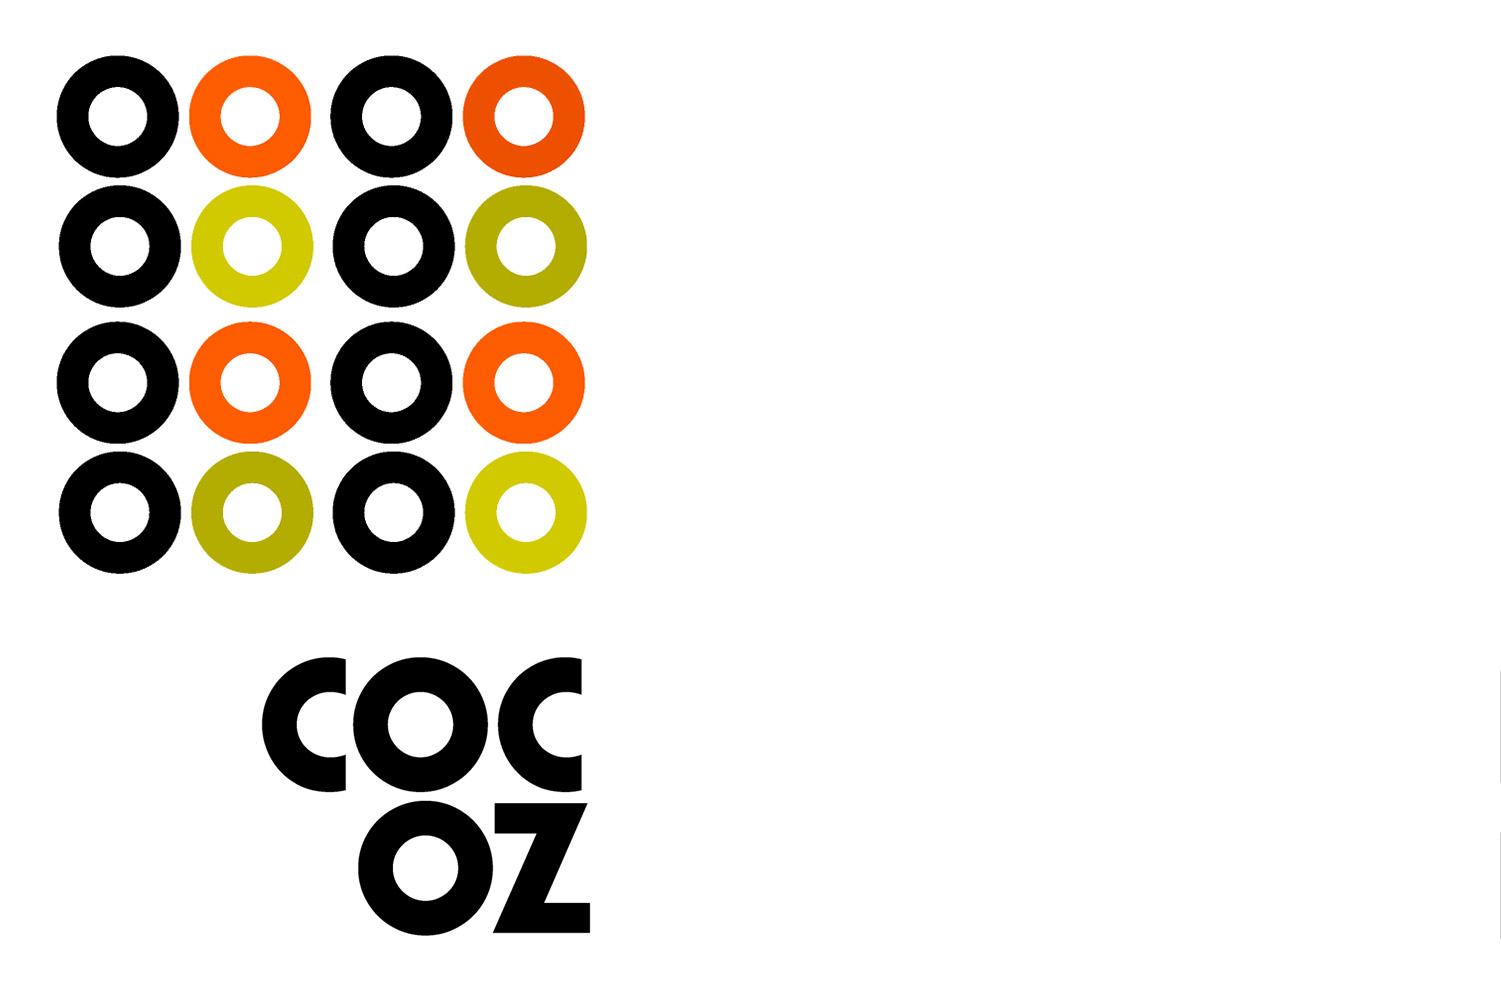 Cocoz, logo design image